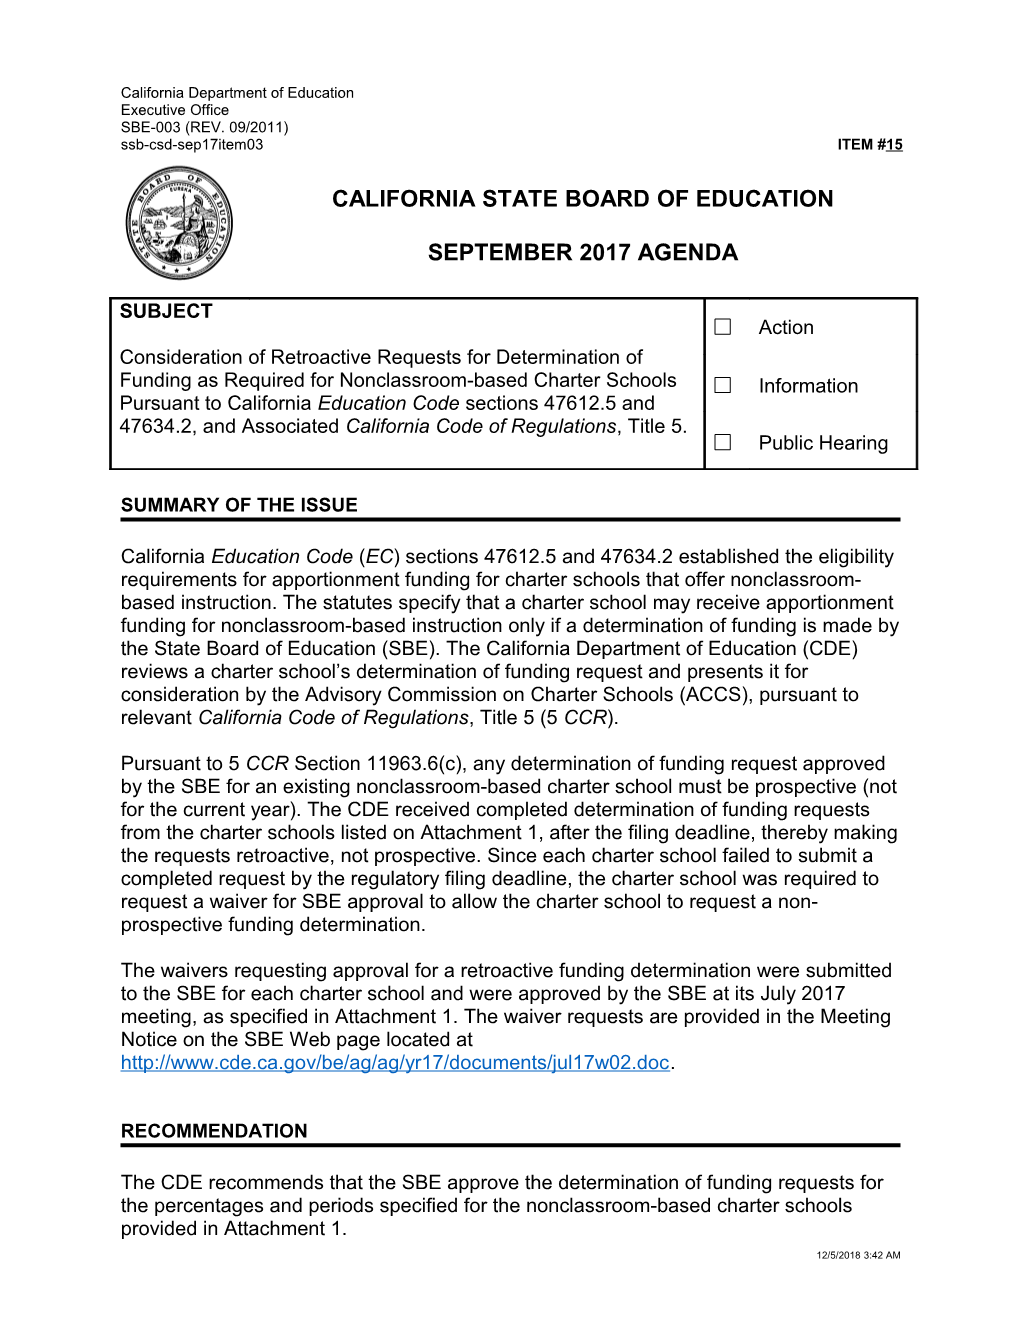 September 2017 Agenda Item 15 - Meeting Agendas (CA State Board of Education)